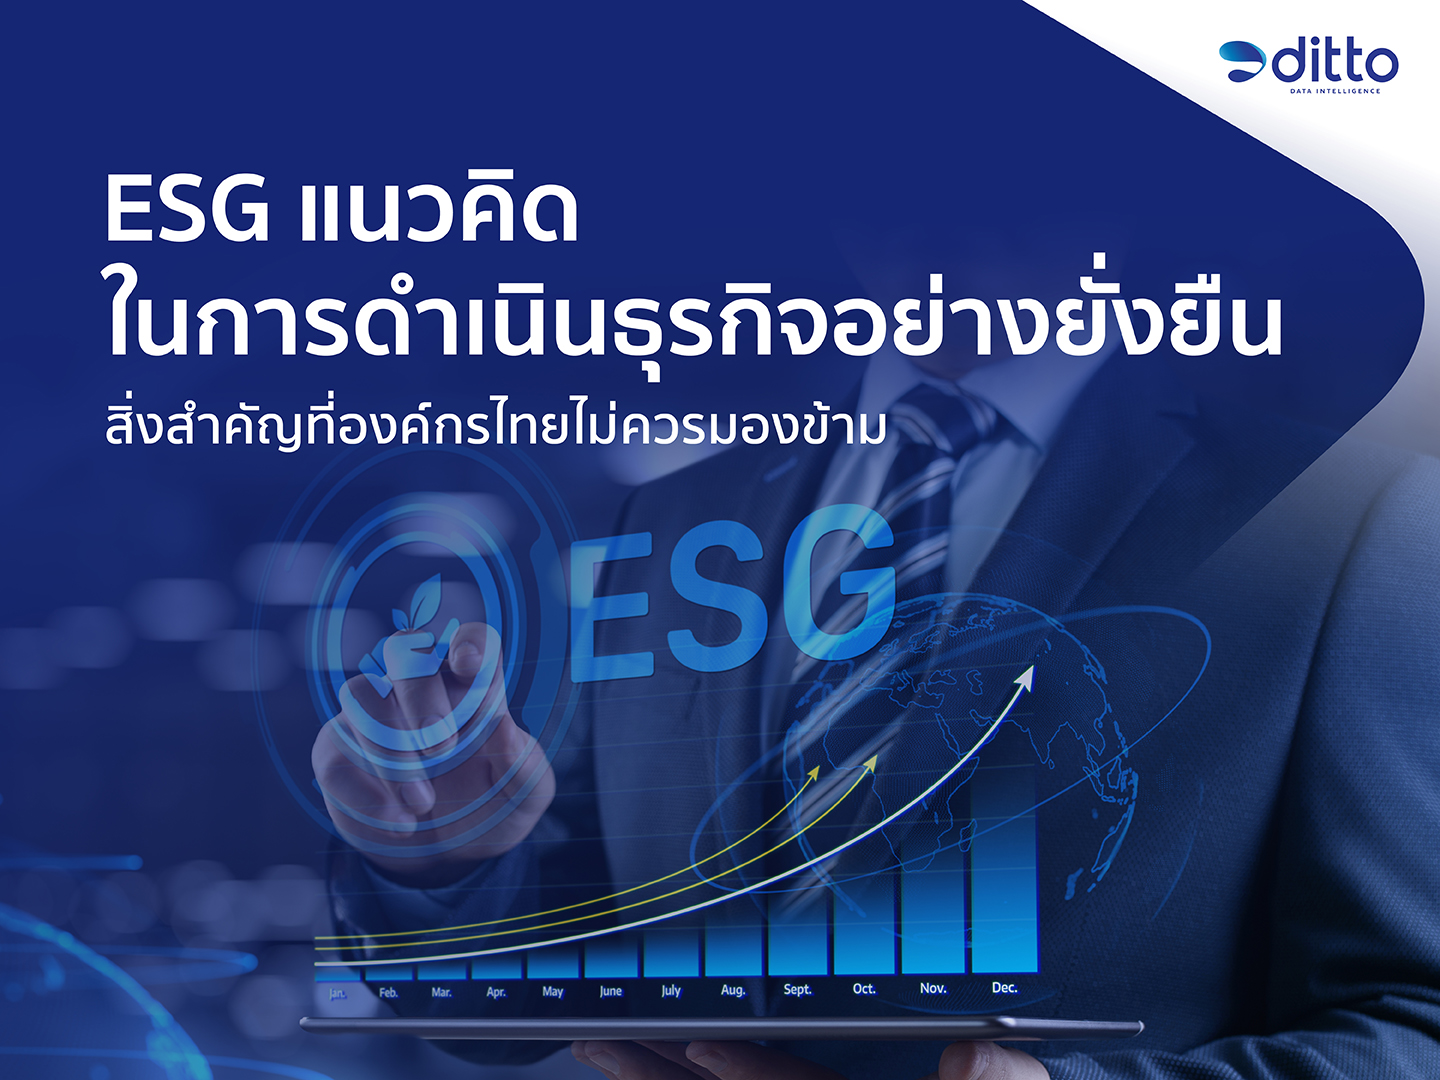 ESG แนวคิดในการดำเนินธุรกิจอย่างยั่งยืน สิ่งสำคัญที่องค์กรไทยไม่ควรมองข้าม